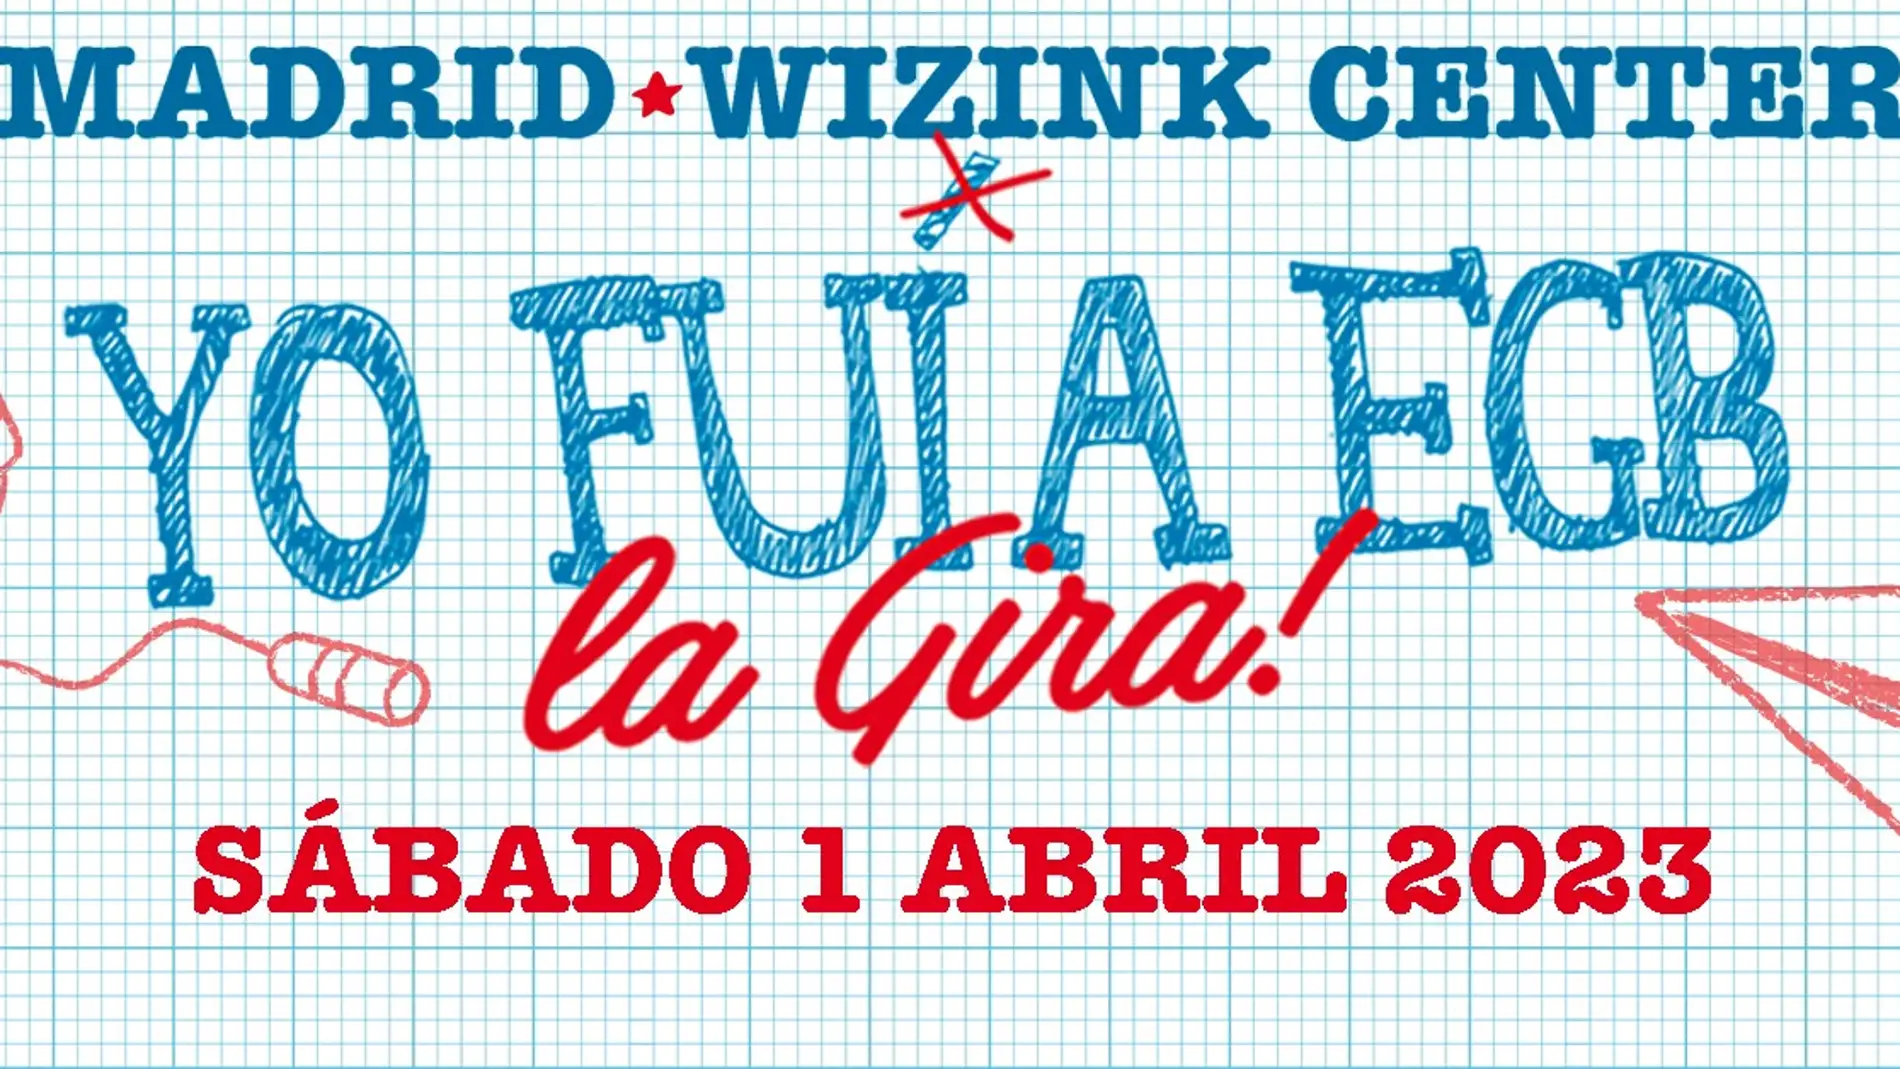 YO FUI A EGB La Gira! regresa al Wizink Center de Madrid